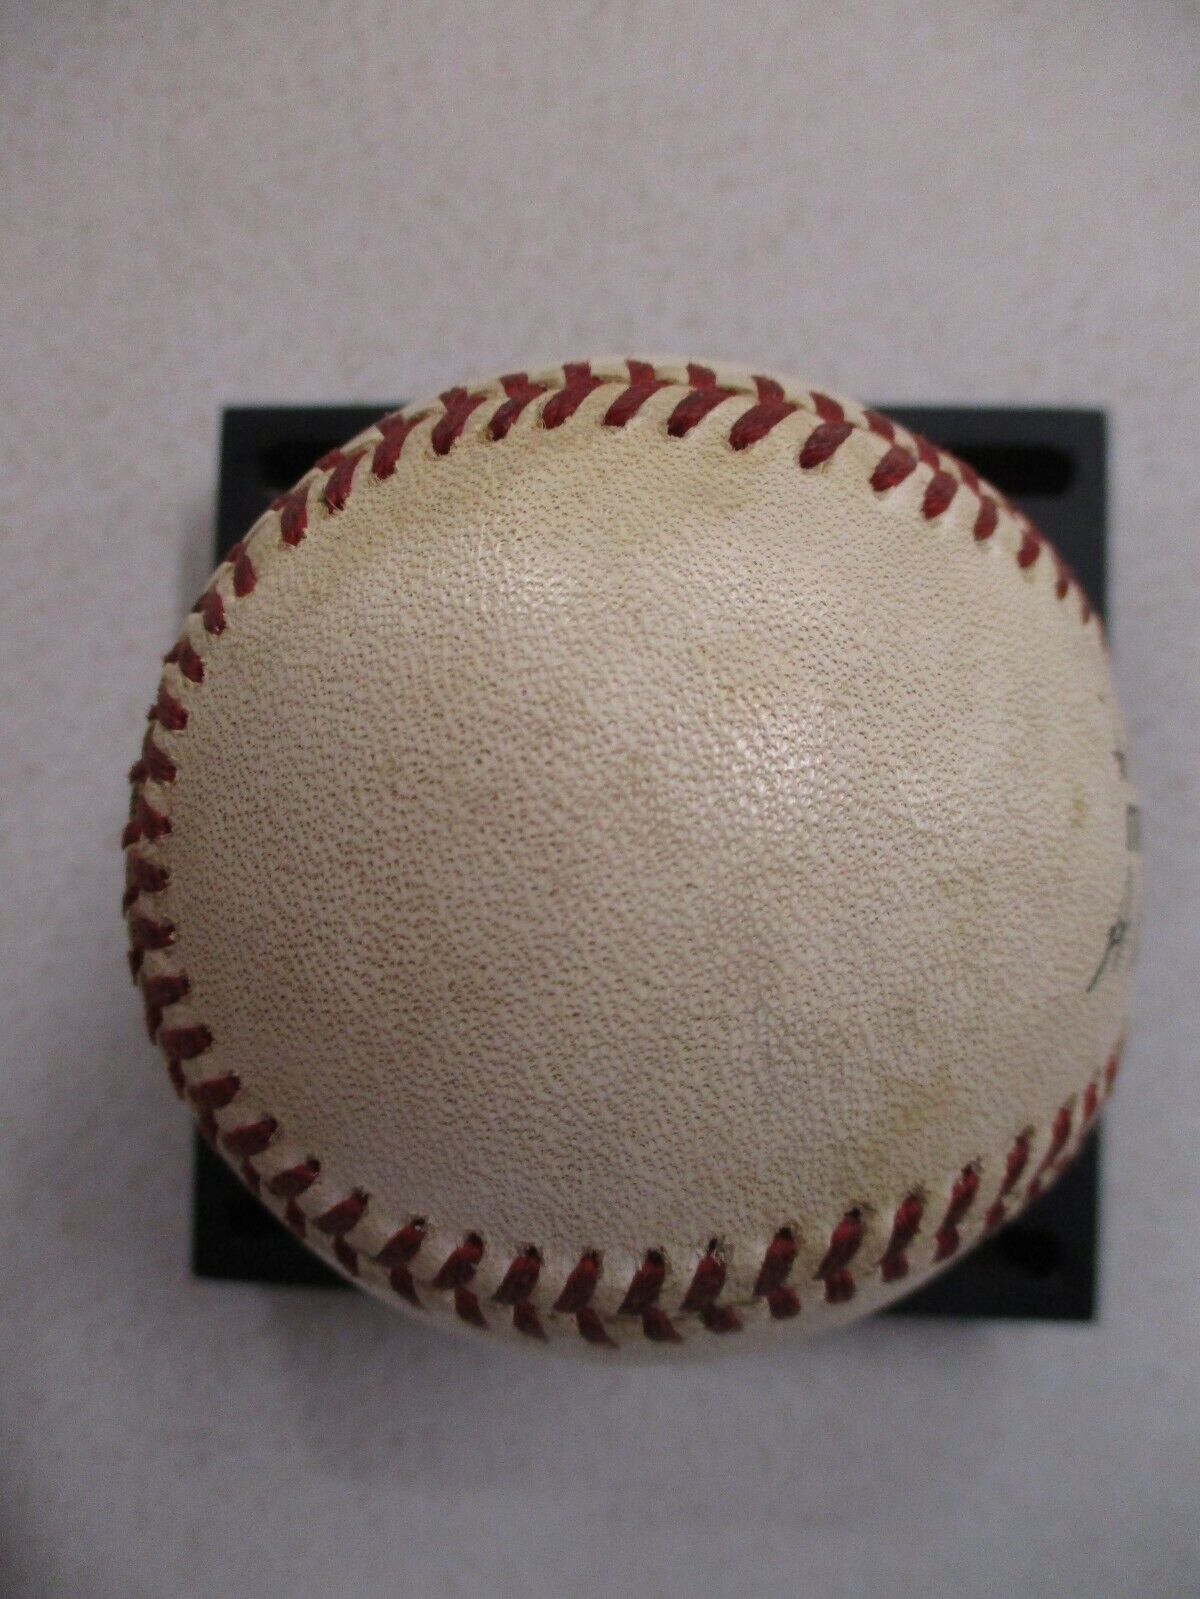 A. Bartlett Giamatti Game Used Official Ball National League Rawlings Baseball